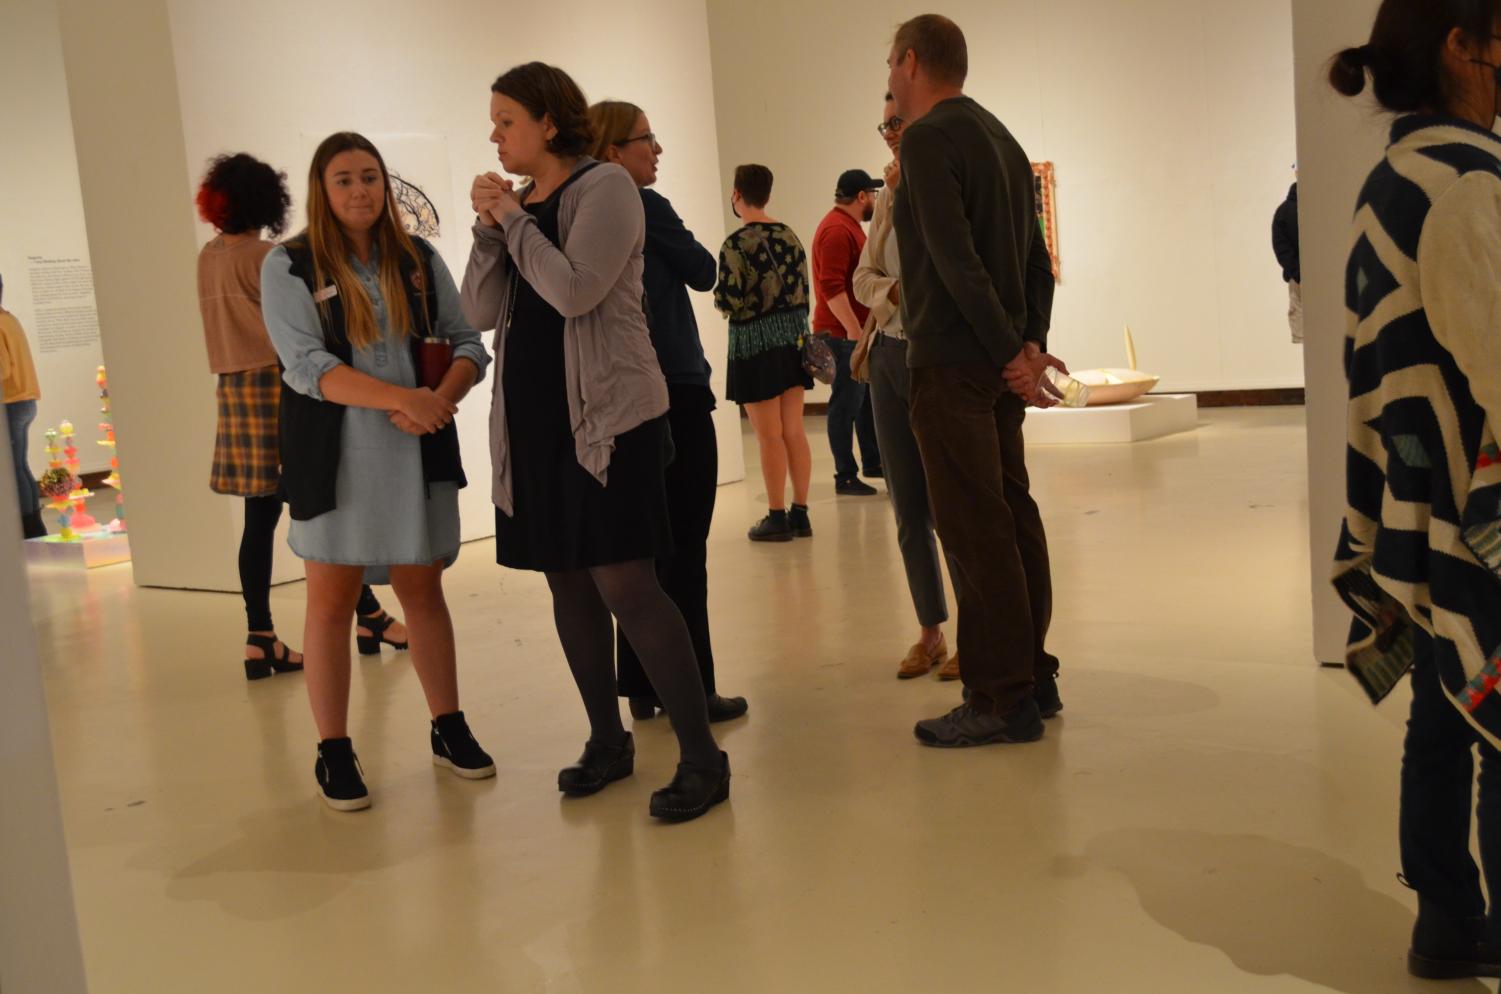 Sarah+Spurgeon+Gallery+hosts+first+SOIL+Art+Collective+exhibit